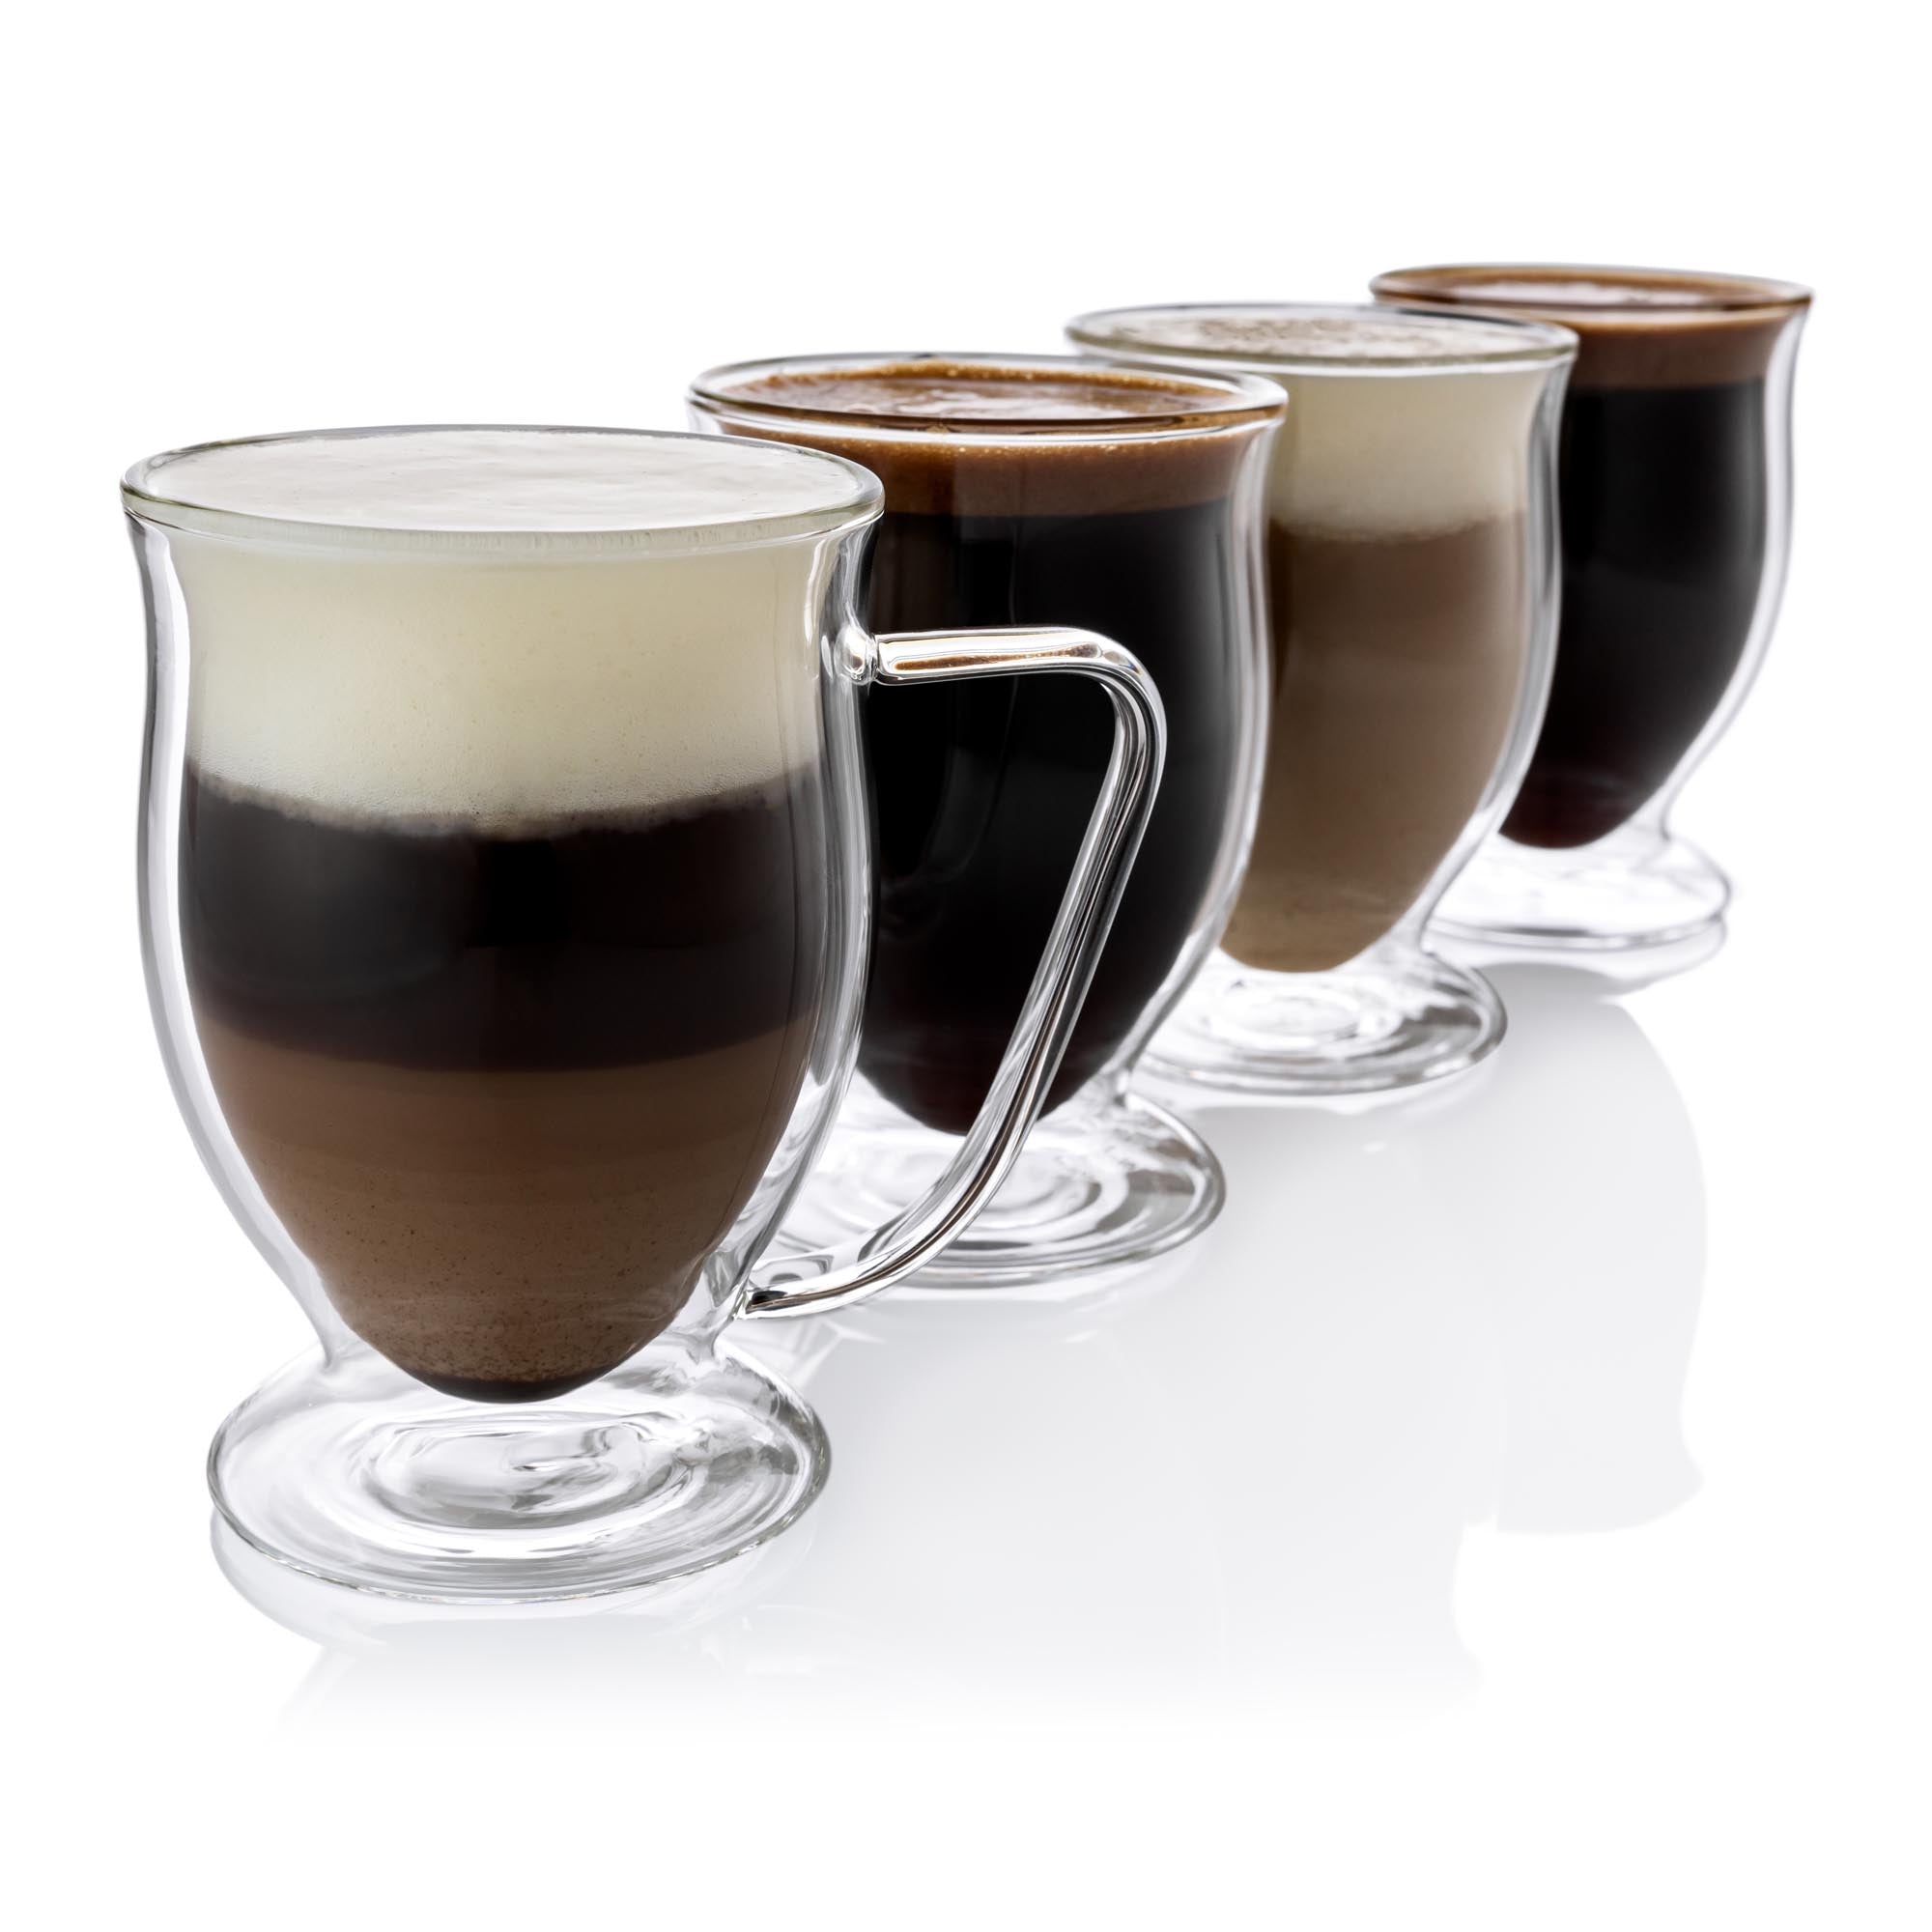 Microwave-Safe Mugs & Microwavable Coffee Cups